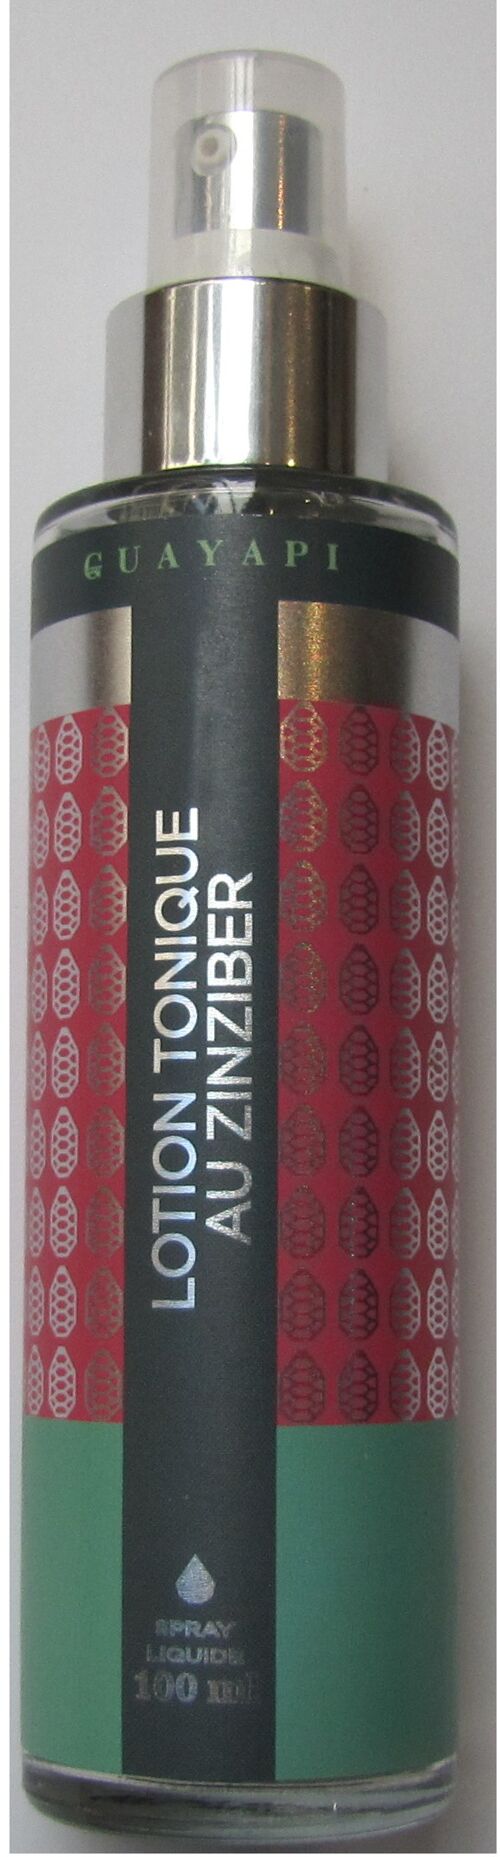 Zingiber lotion tonique astringente - Flacon 100 ml -